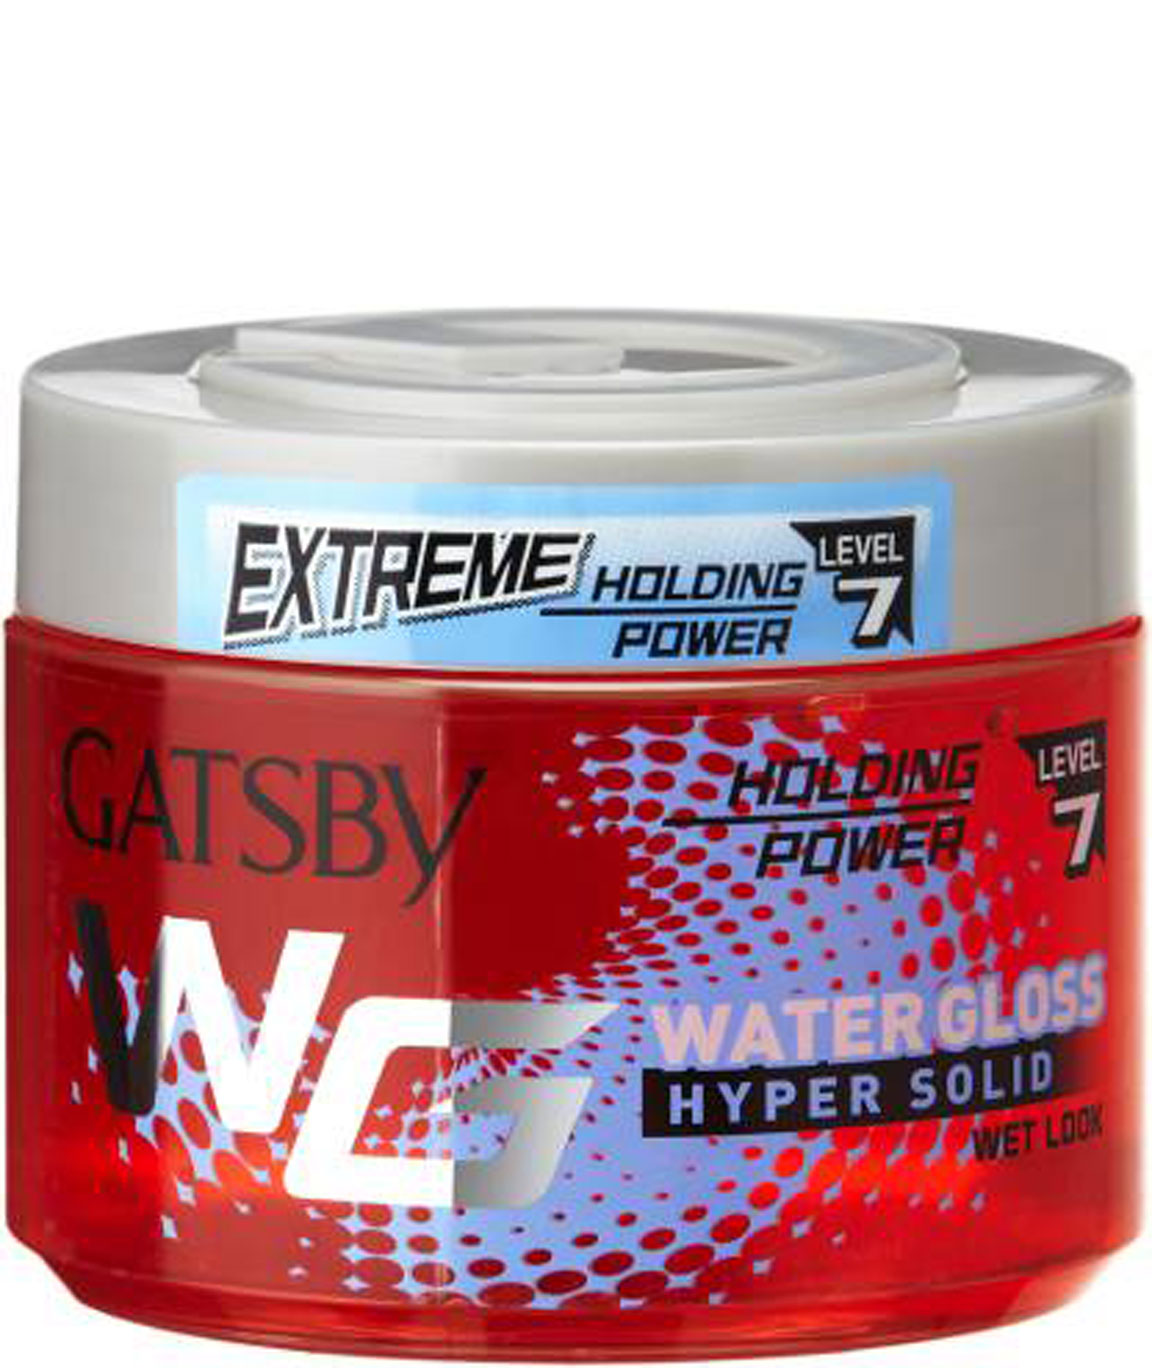 GATSBY WATER GLOSS HYPER SOLID GEL (300 G)